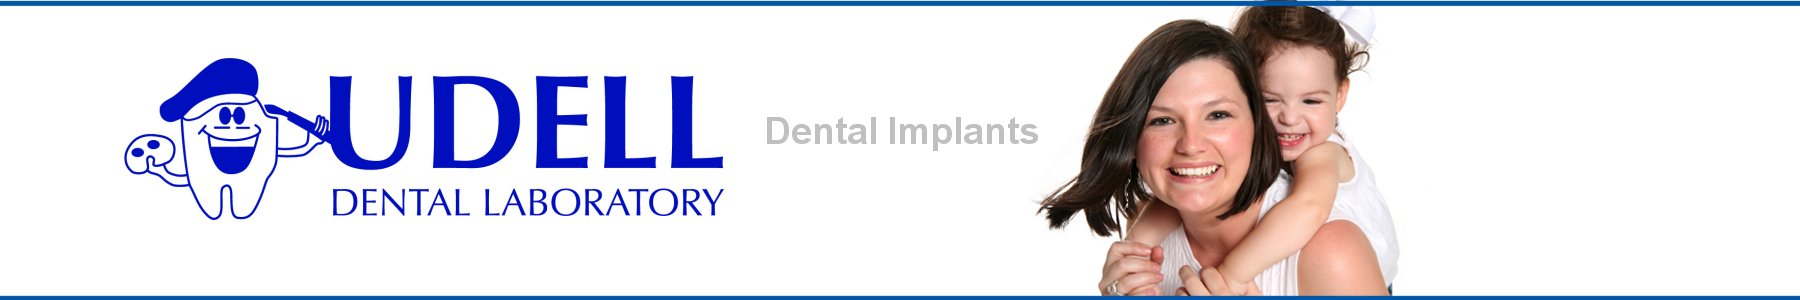 Udell Dental Laboratory Implants